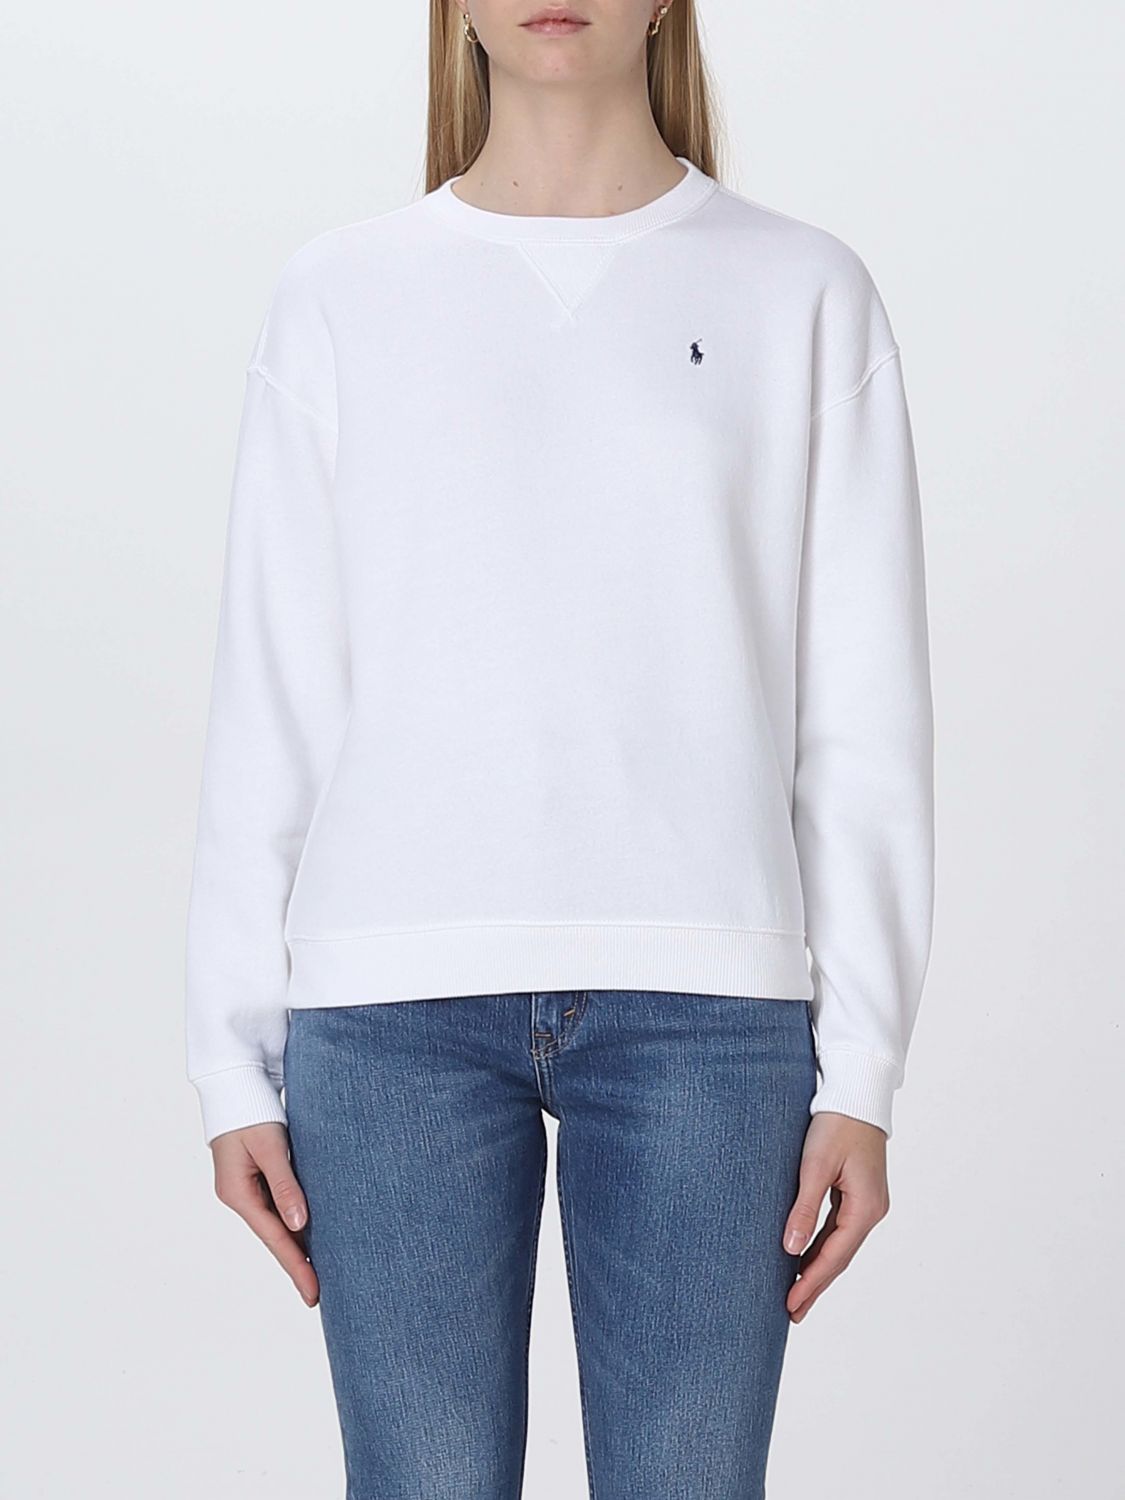 POLO RALPH LAUREN: sweatshirt for woman - White | Polo Ralph Lauren  sweatshirt 211891557 online on 